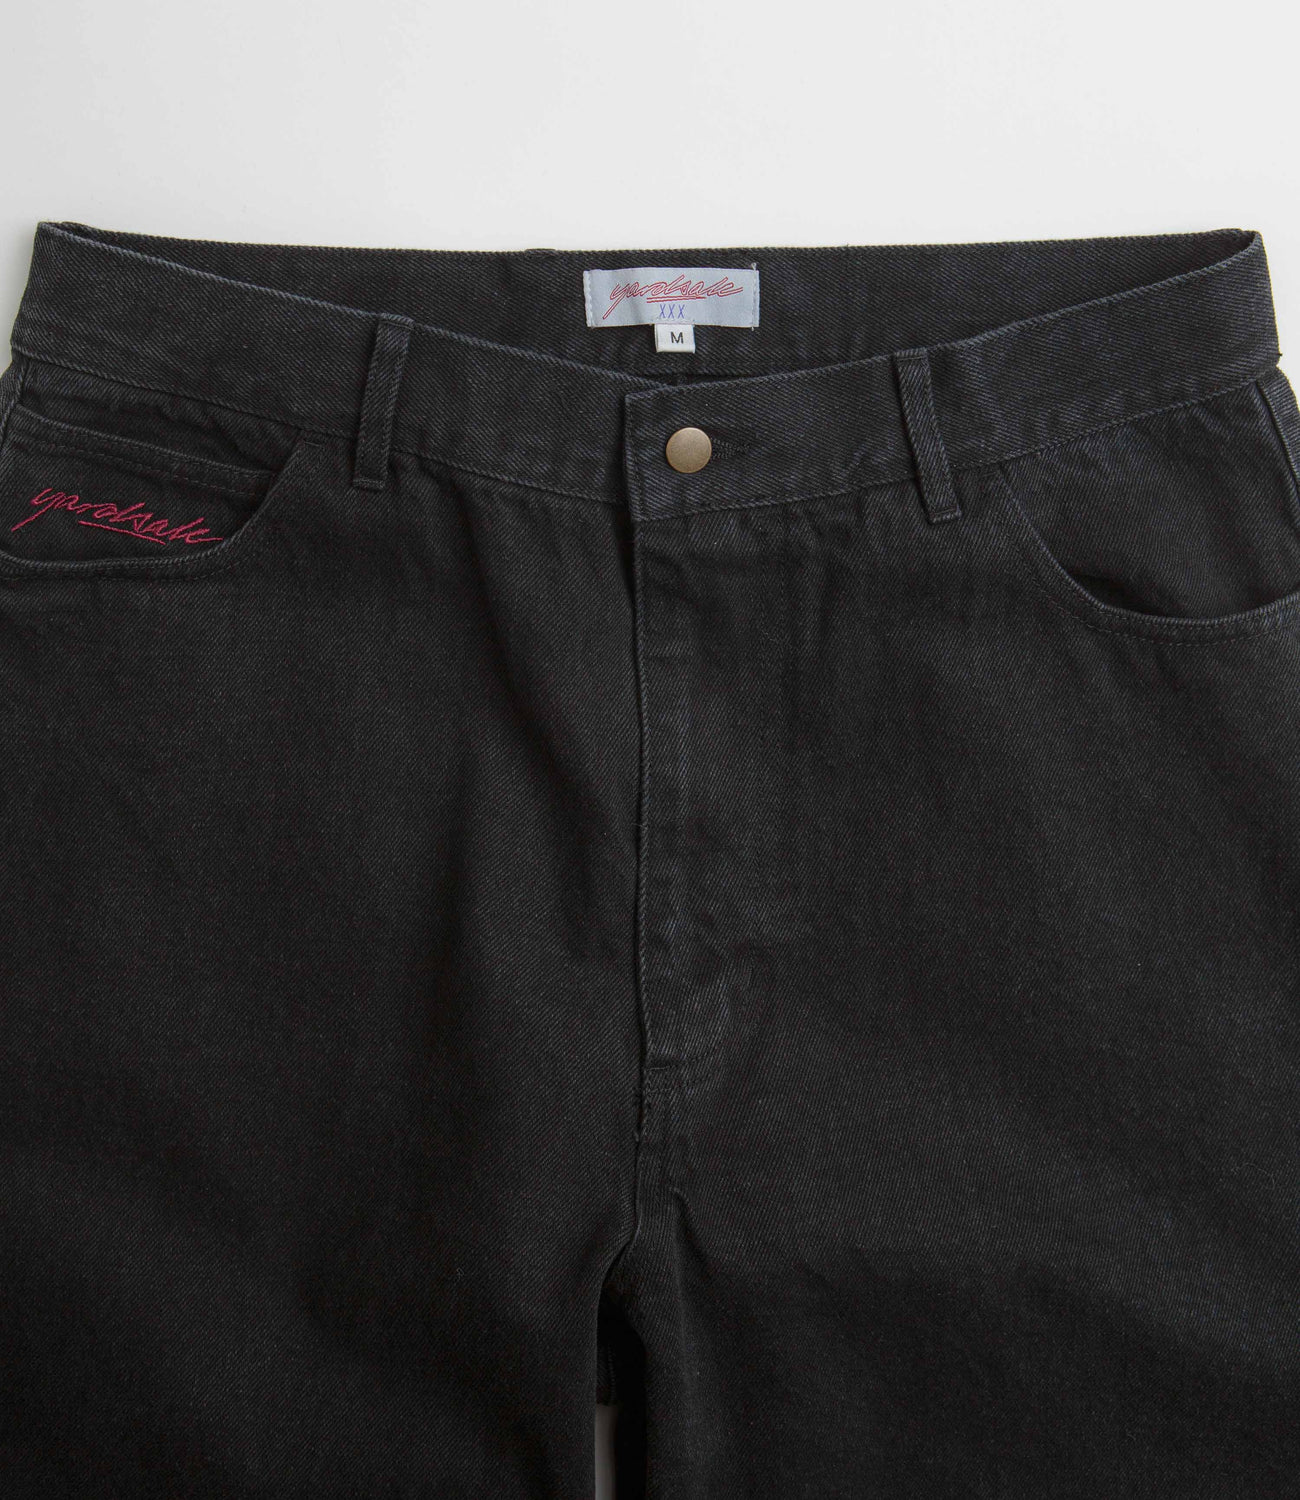 Yardsale Phantasy Jeans black S 男女兼用2013年にDanielK - デニム